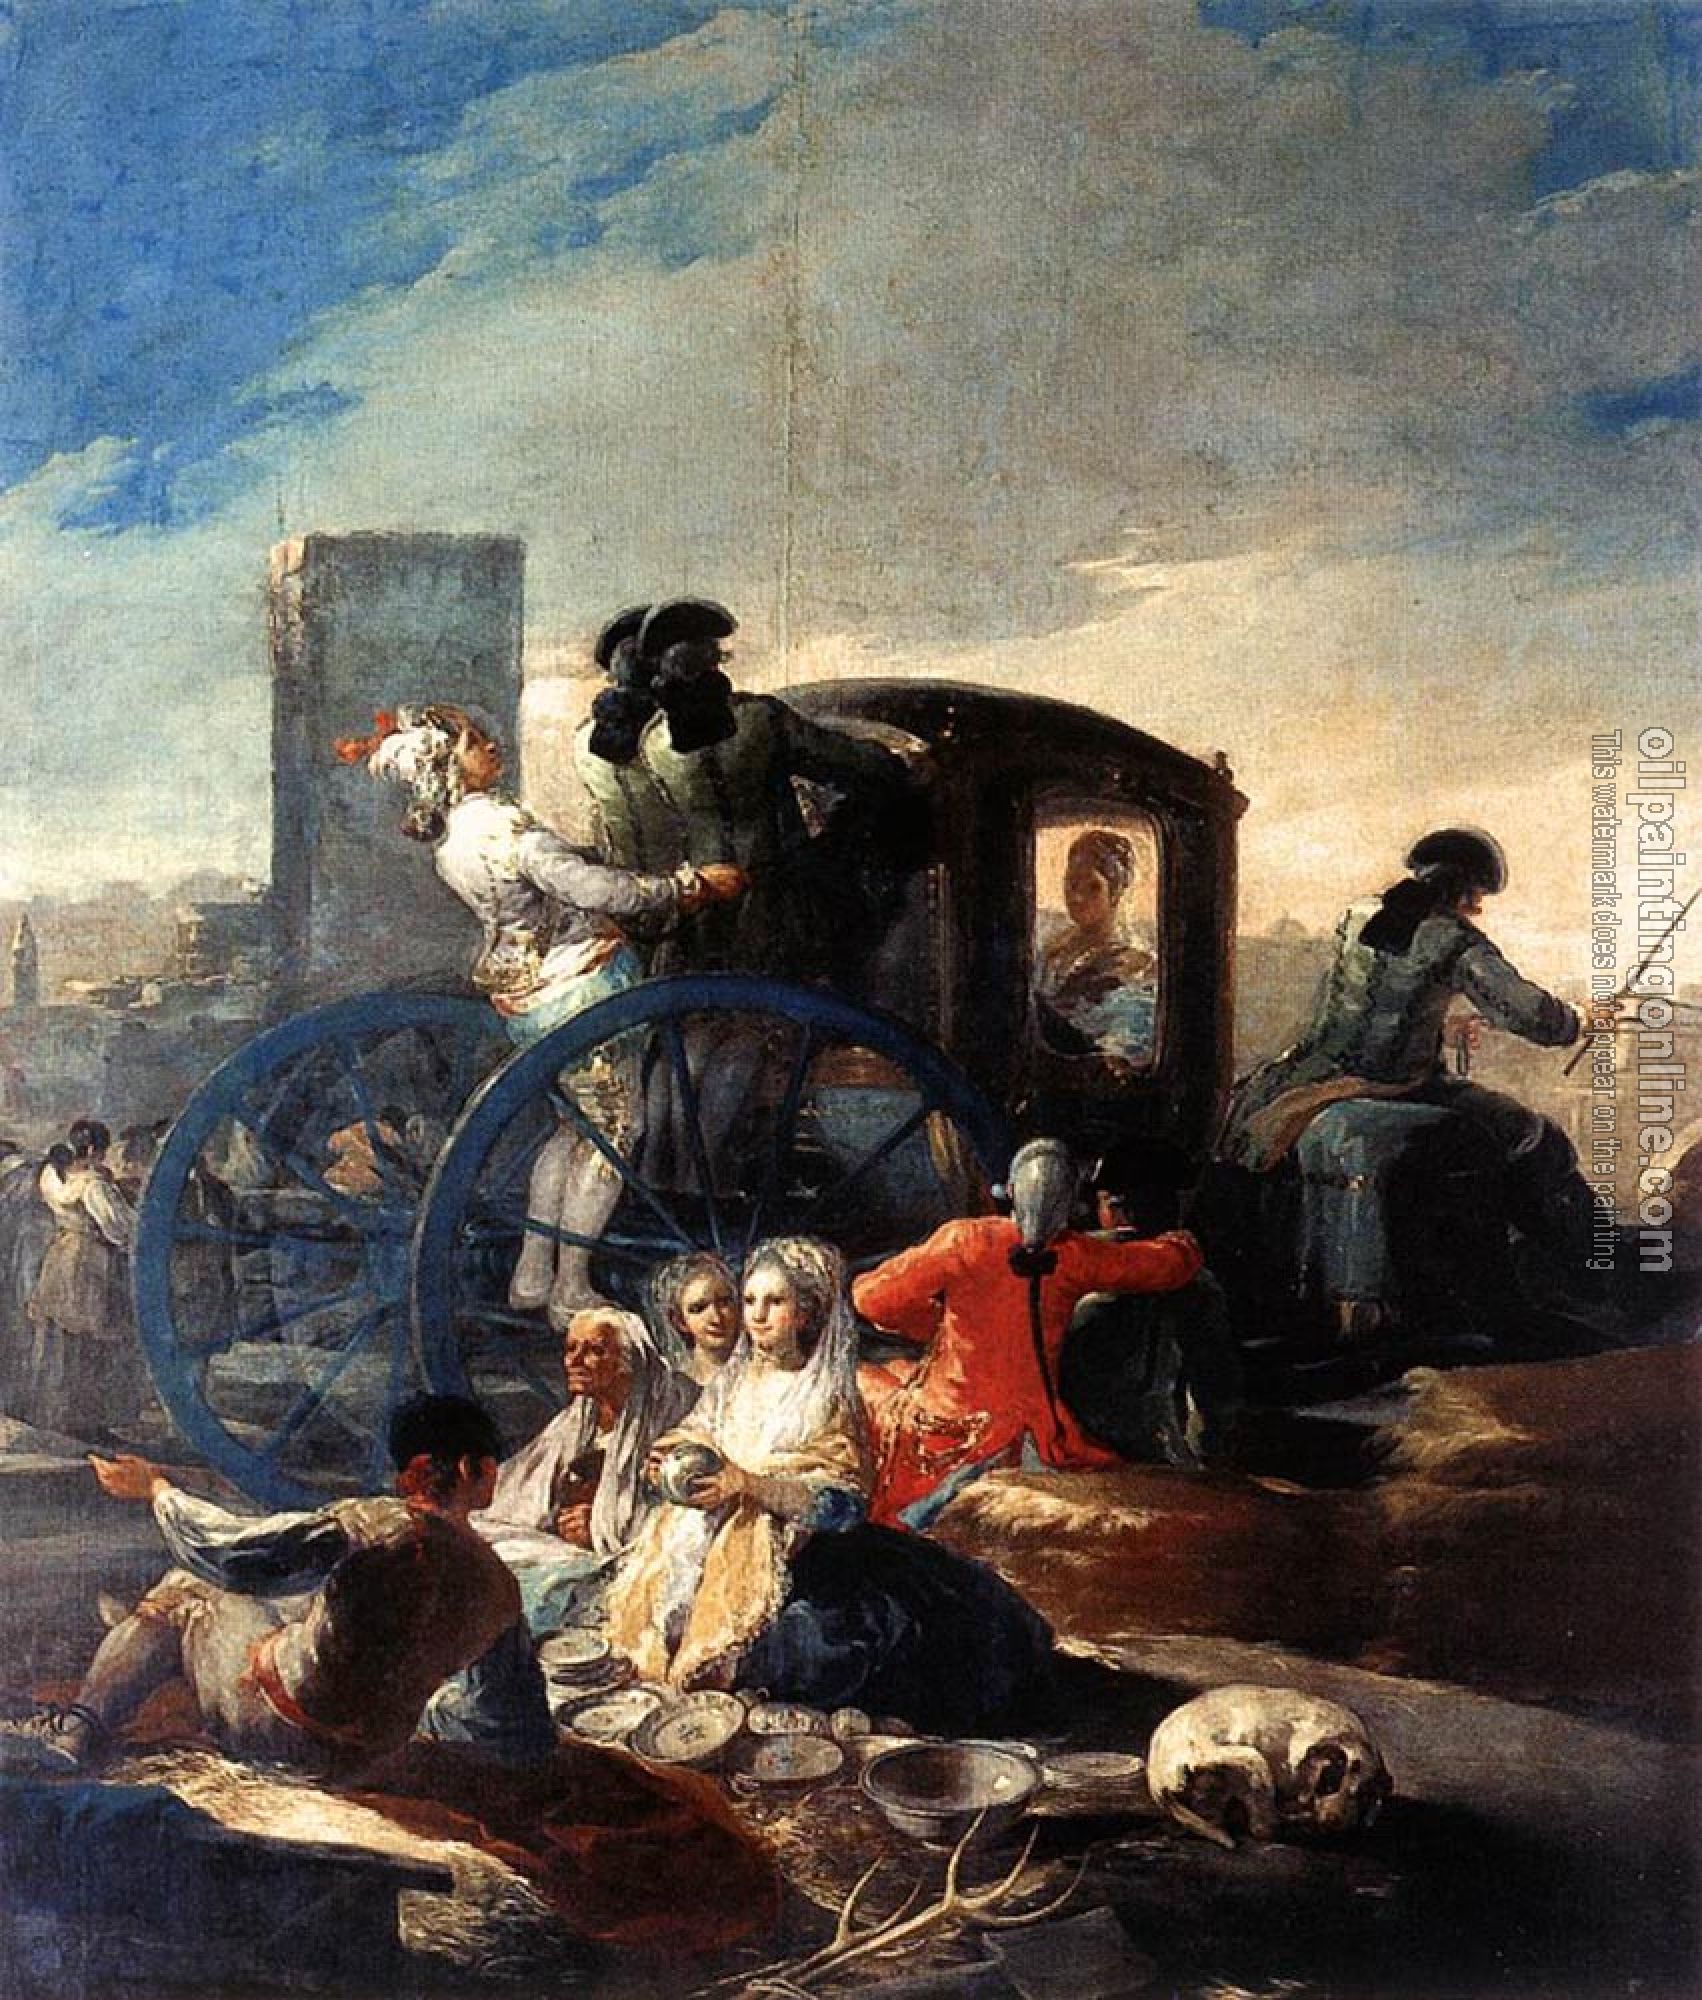 Goya, Francisco de - The Crockery Vendor